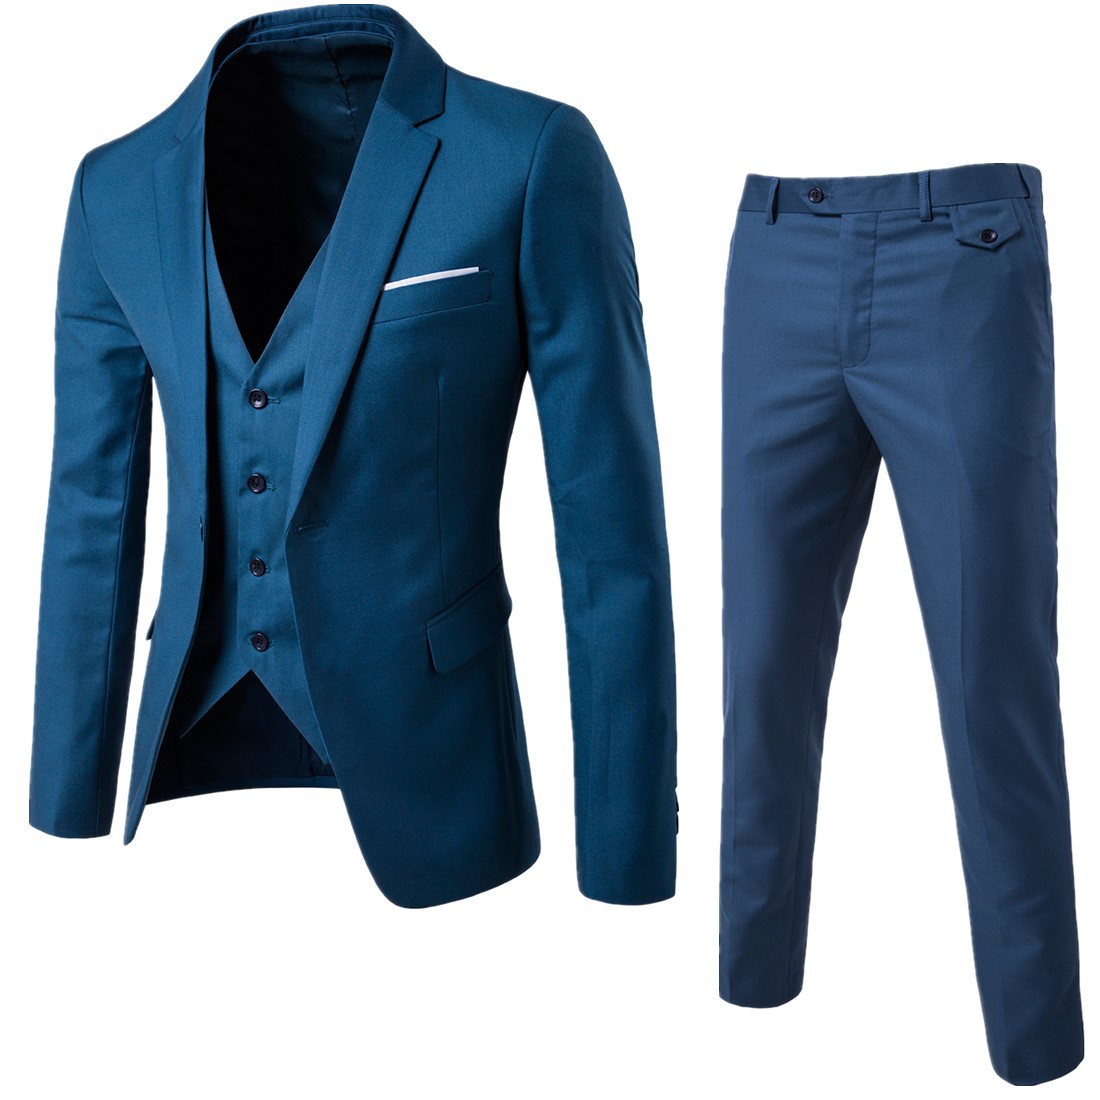 2017 new men's business leisure three piece suit coat bridegroom best man wedding large one button suit